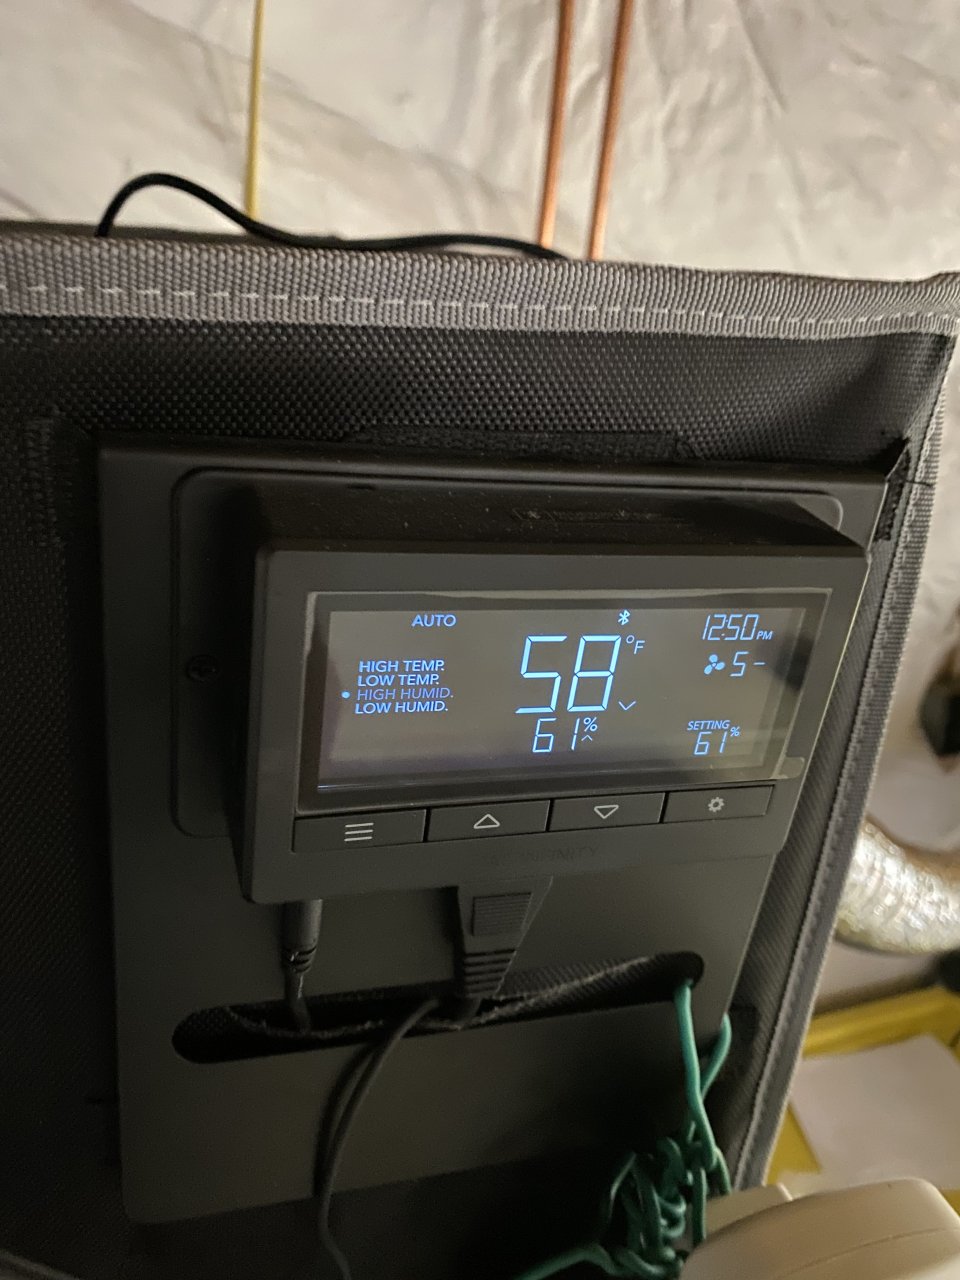 AC Infinity temp/ humidity controller